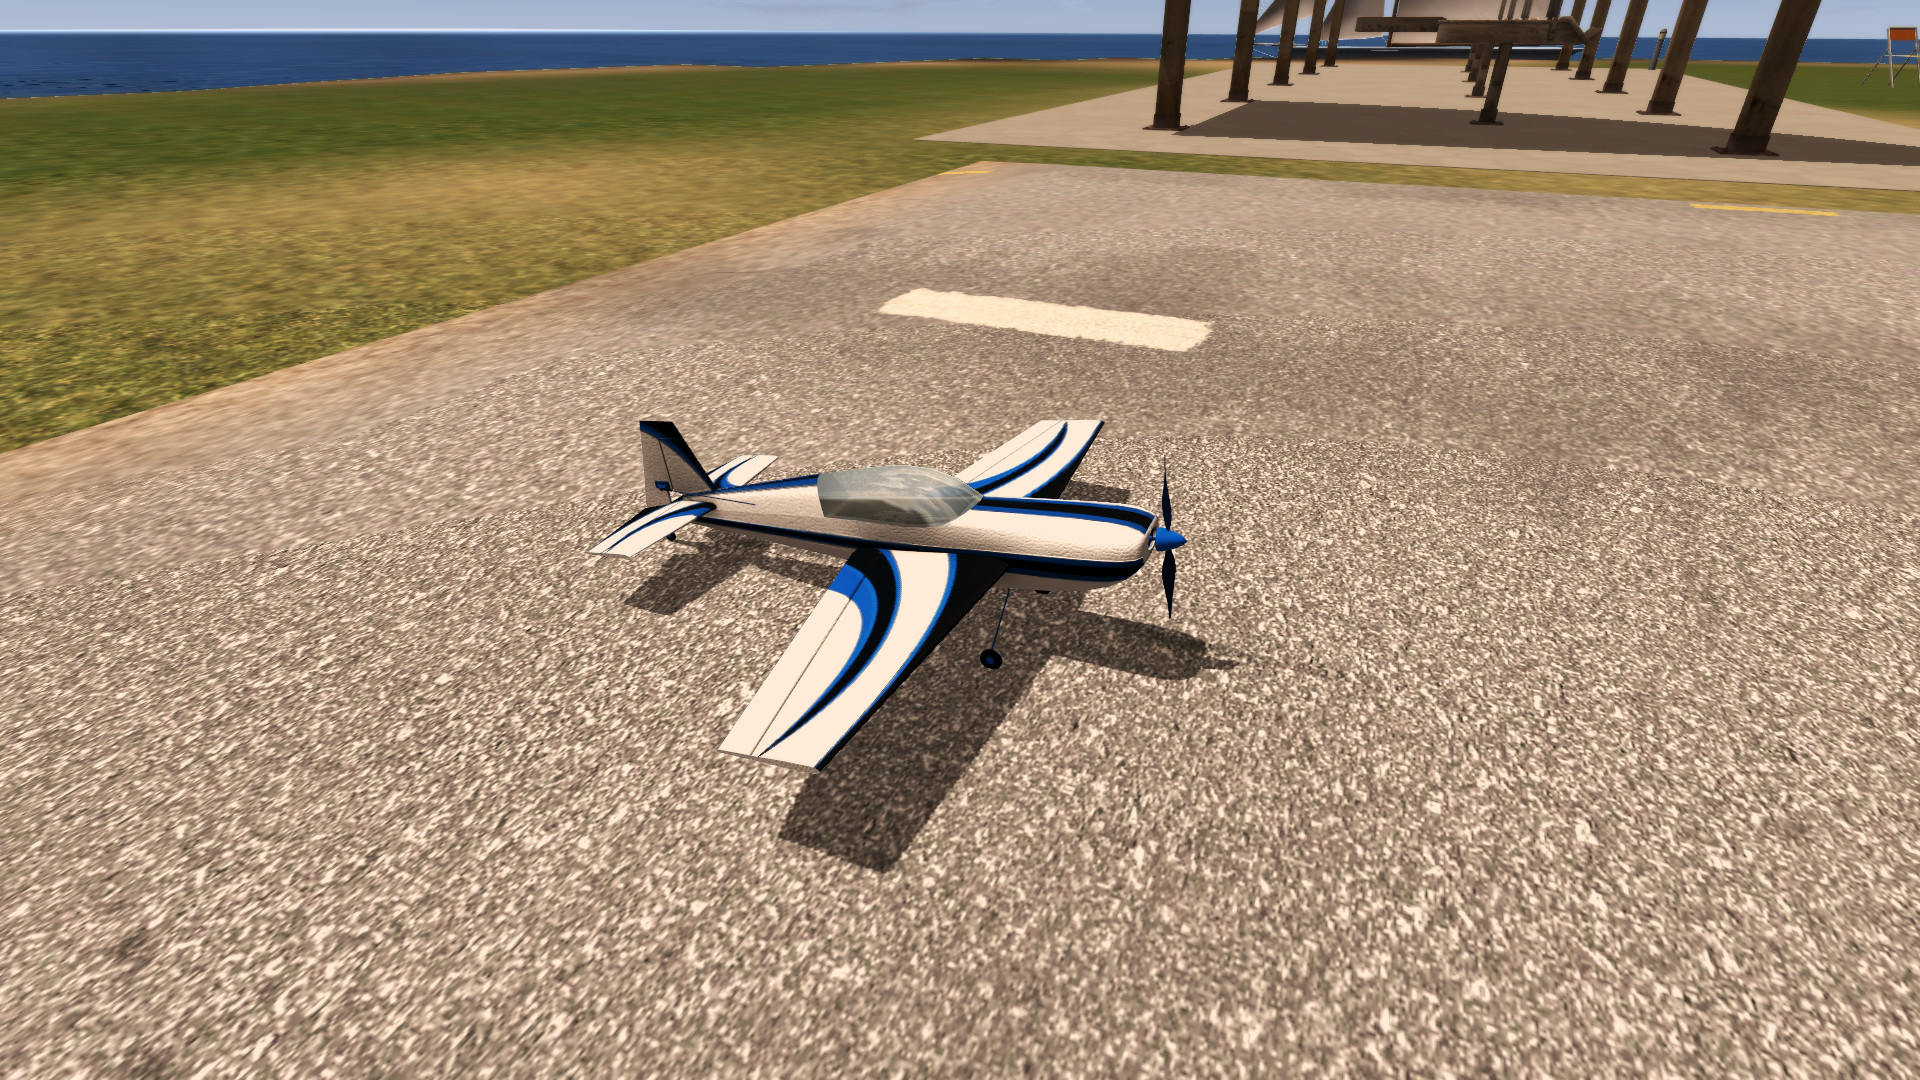 Extreme Plane Stunts Simulator free